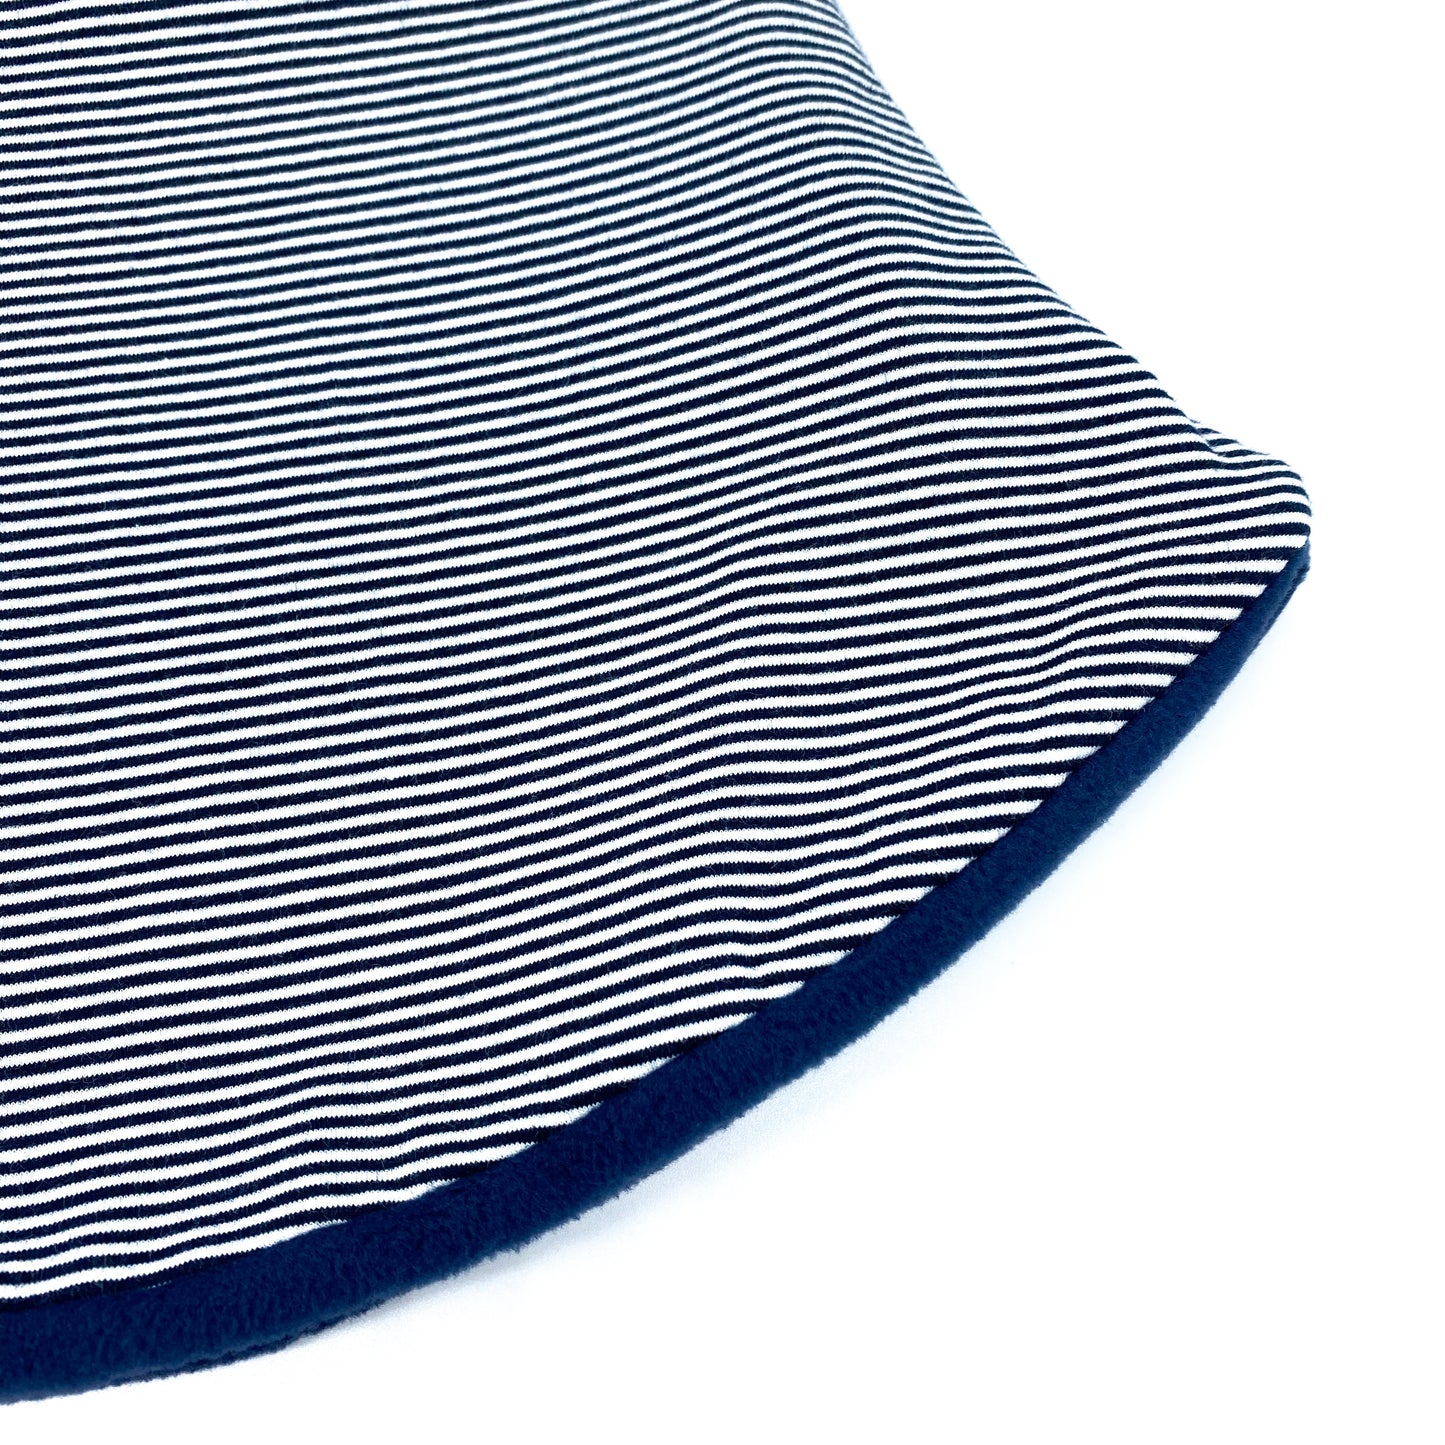 Adult Handmade Neck Warmer Stripes Thin Navy